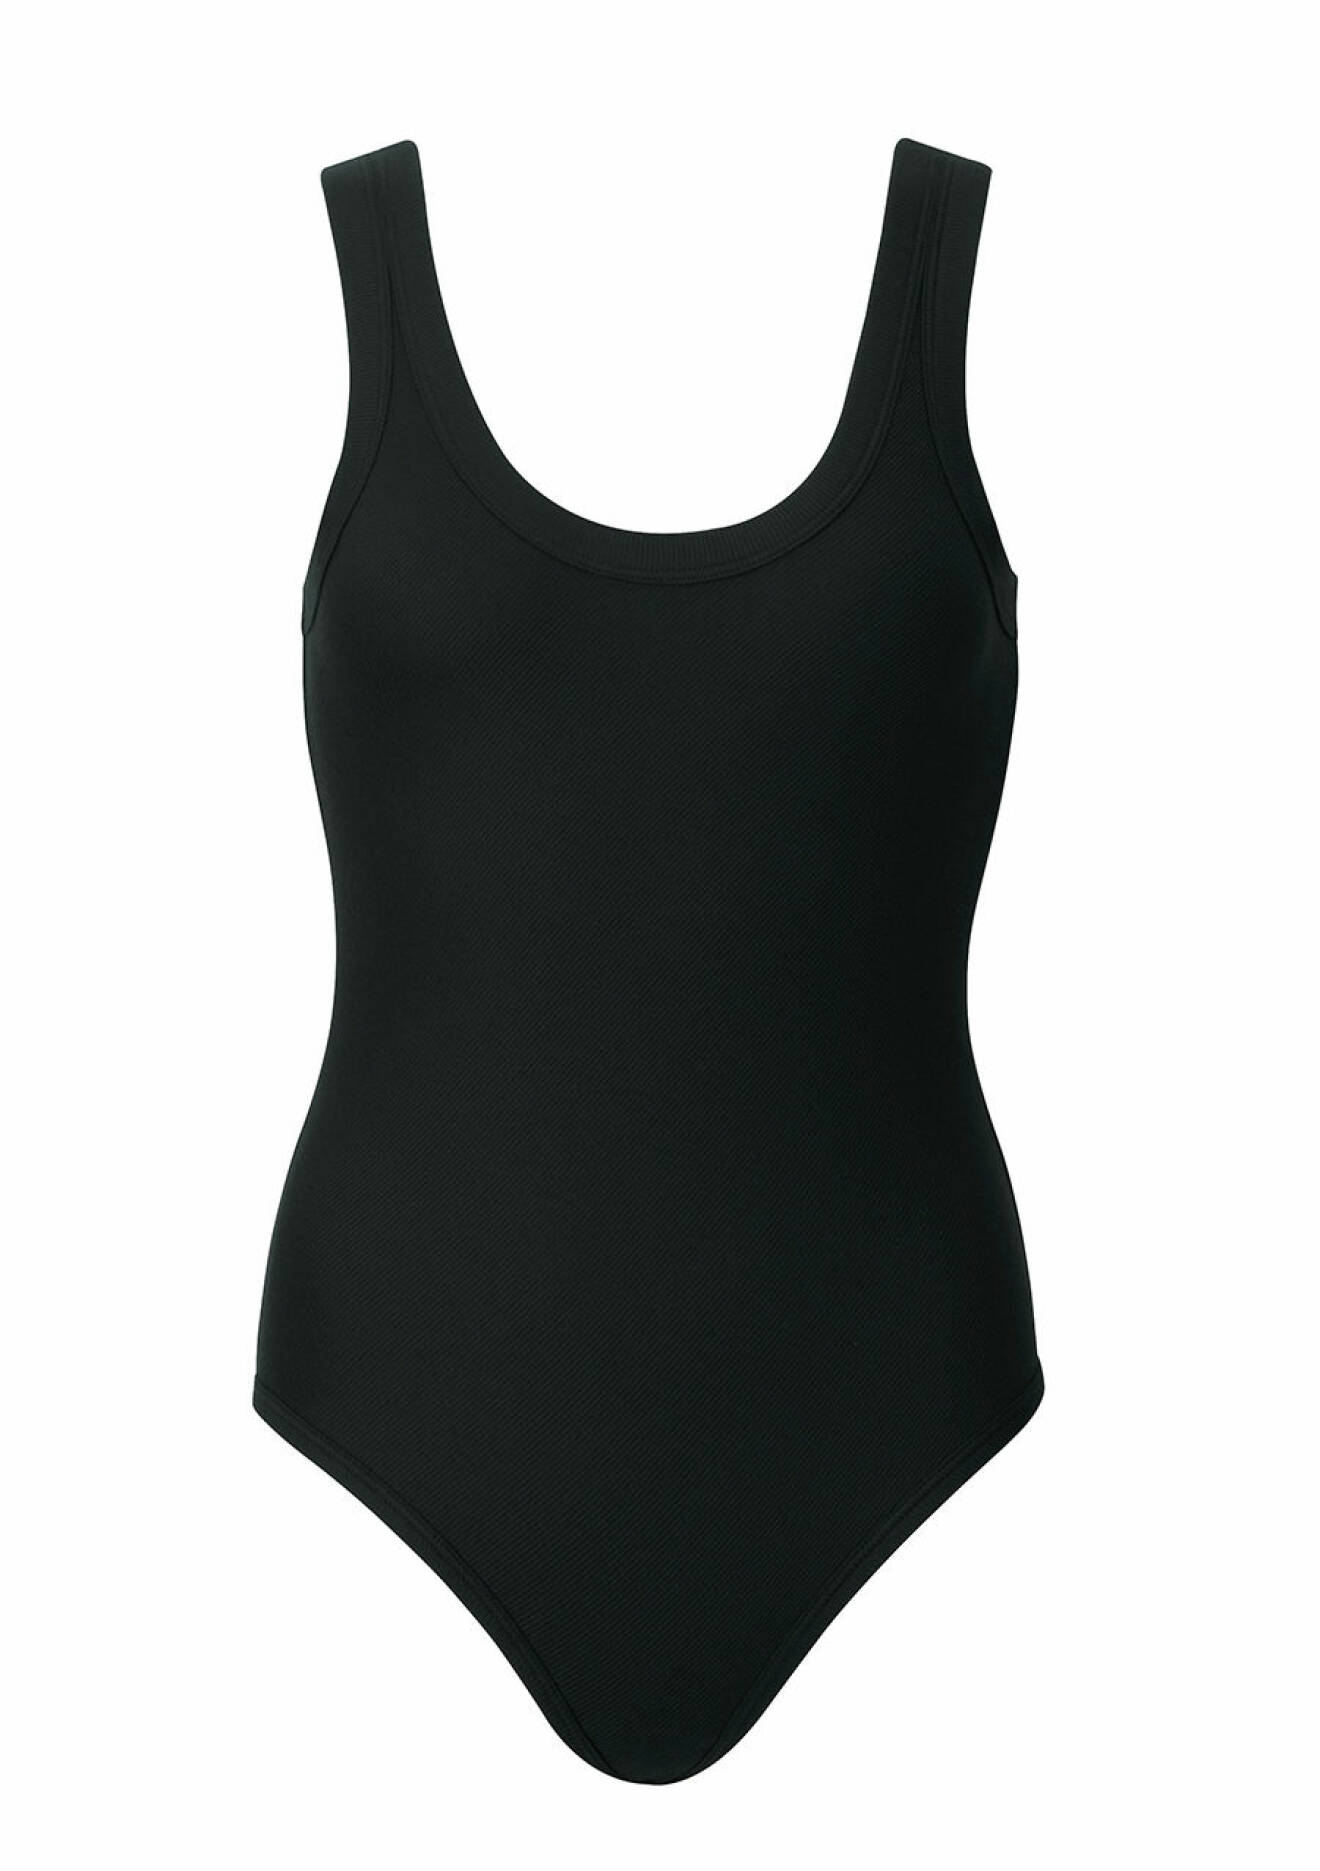 Bodysuit, 349 kr, finns i svart, vitt, grå, beige och limegrönt.